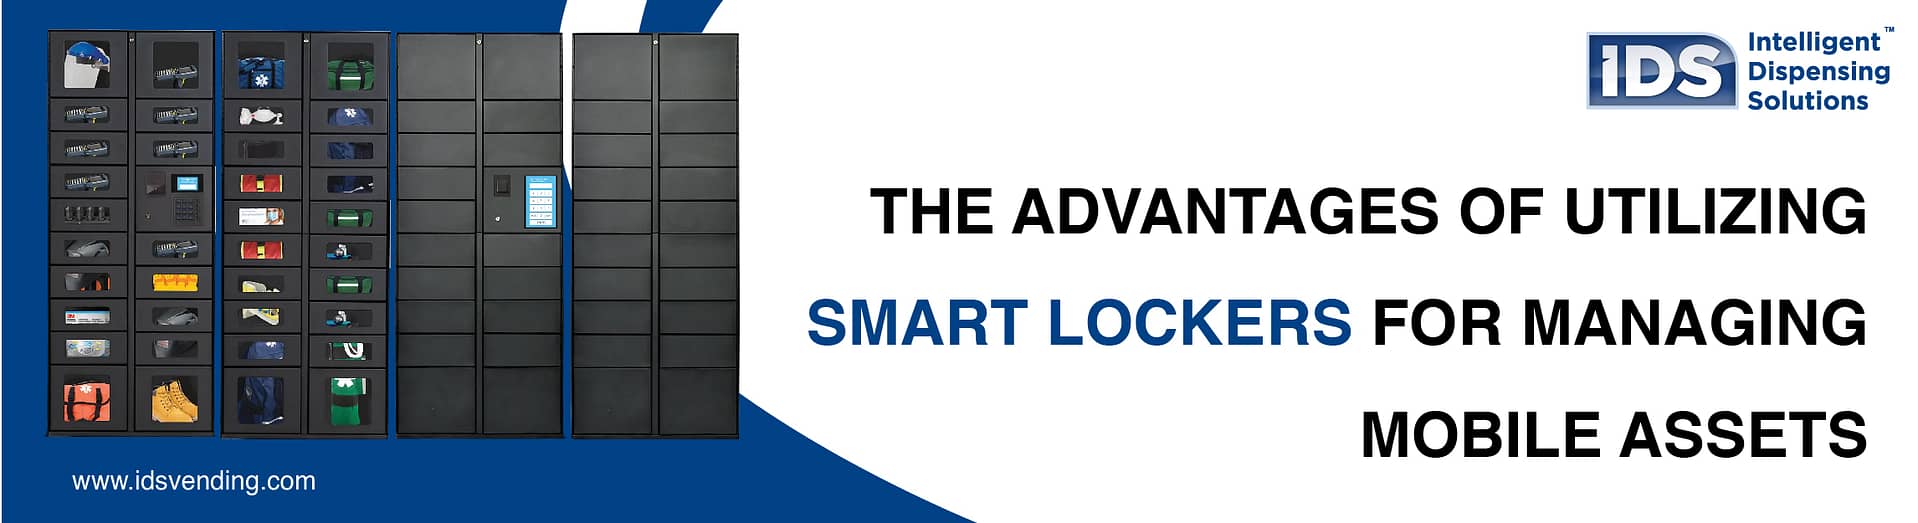 The advantages of using smart lockers for mobile asset management over manual methods - idsvending.com